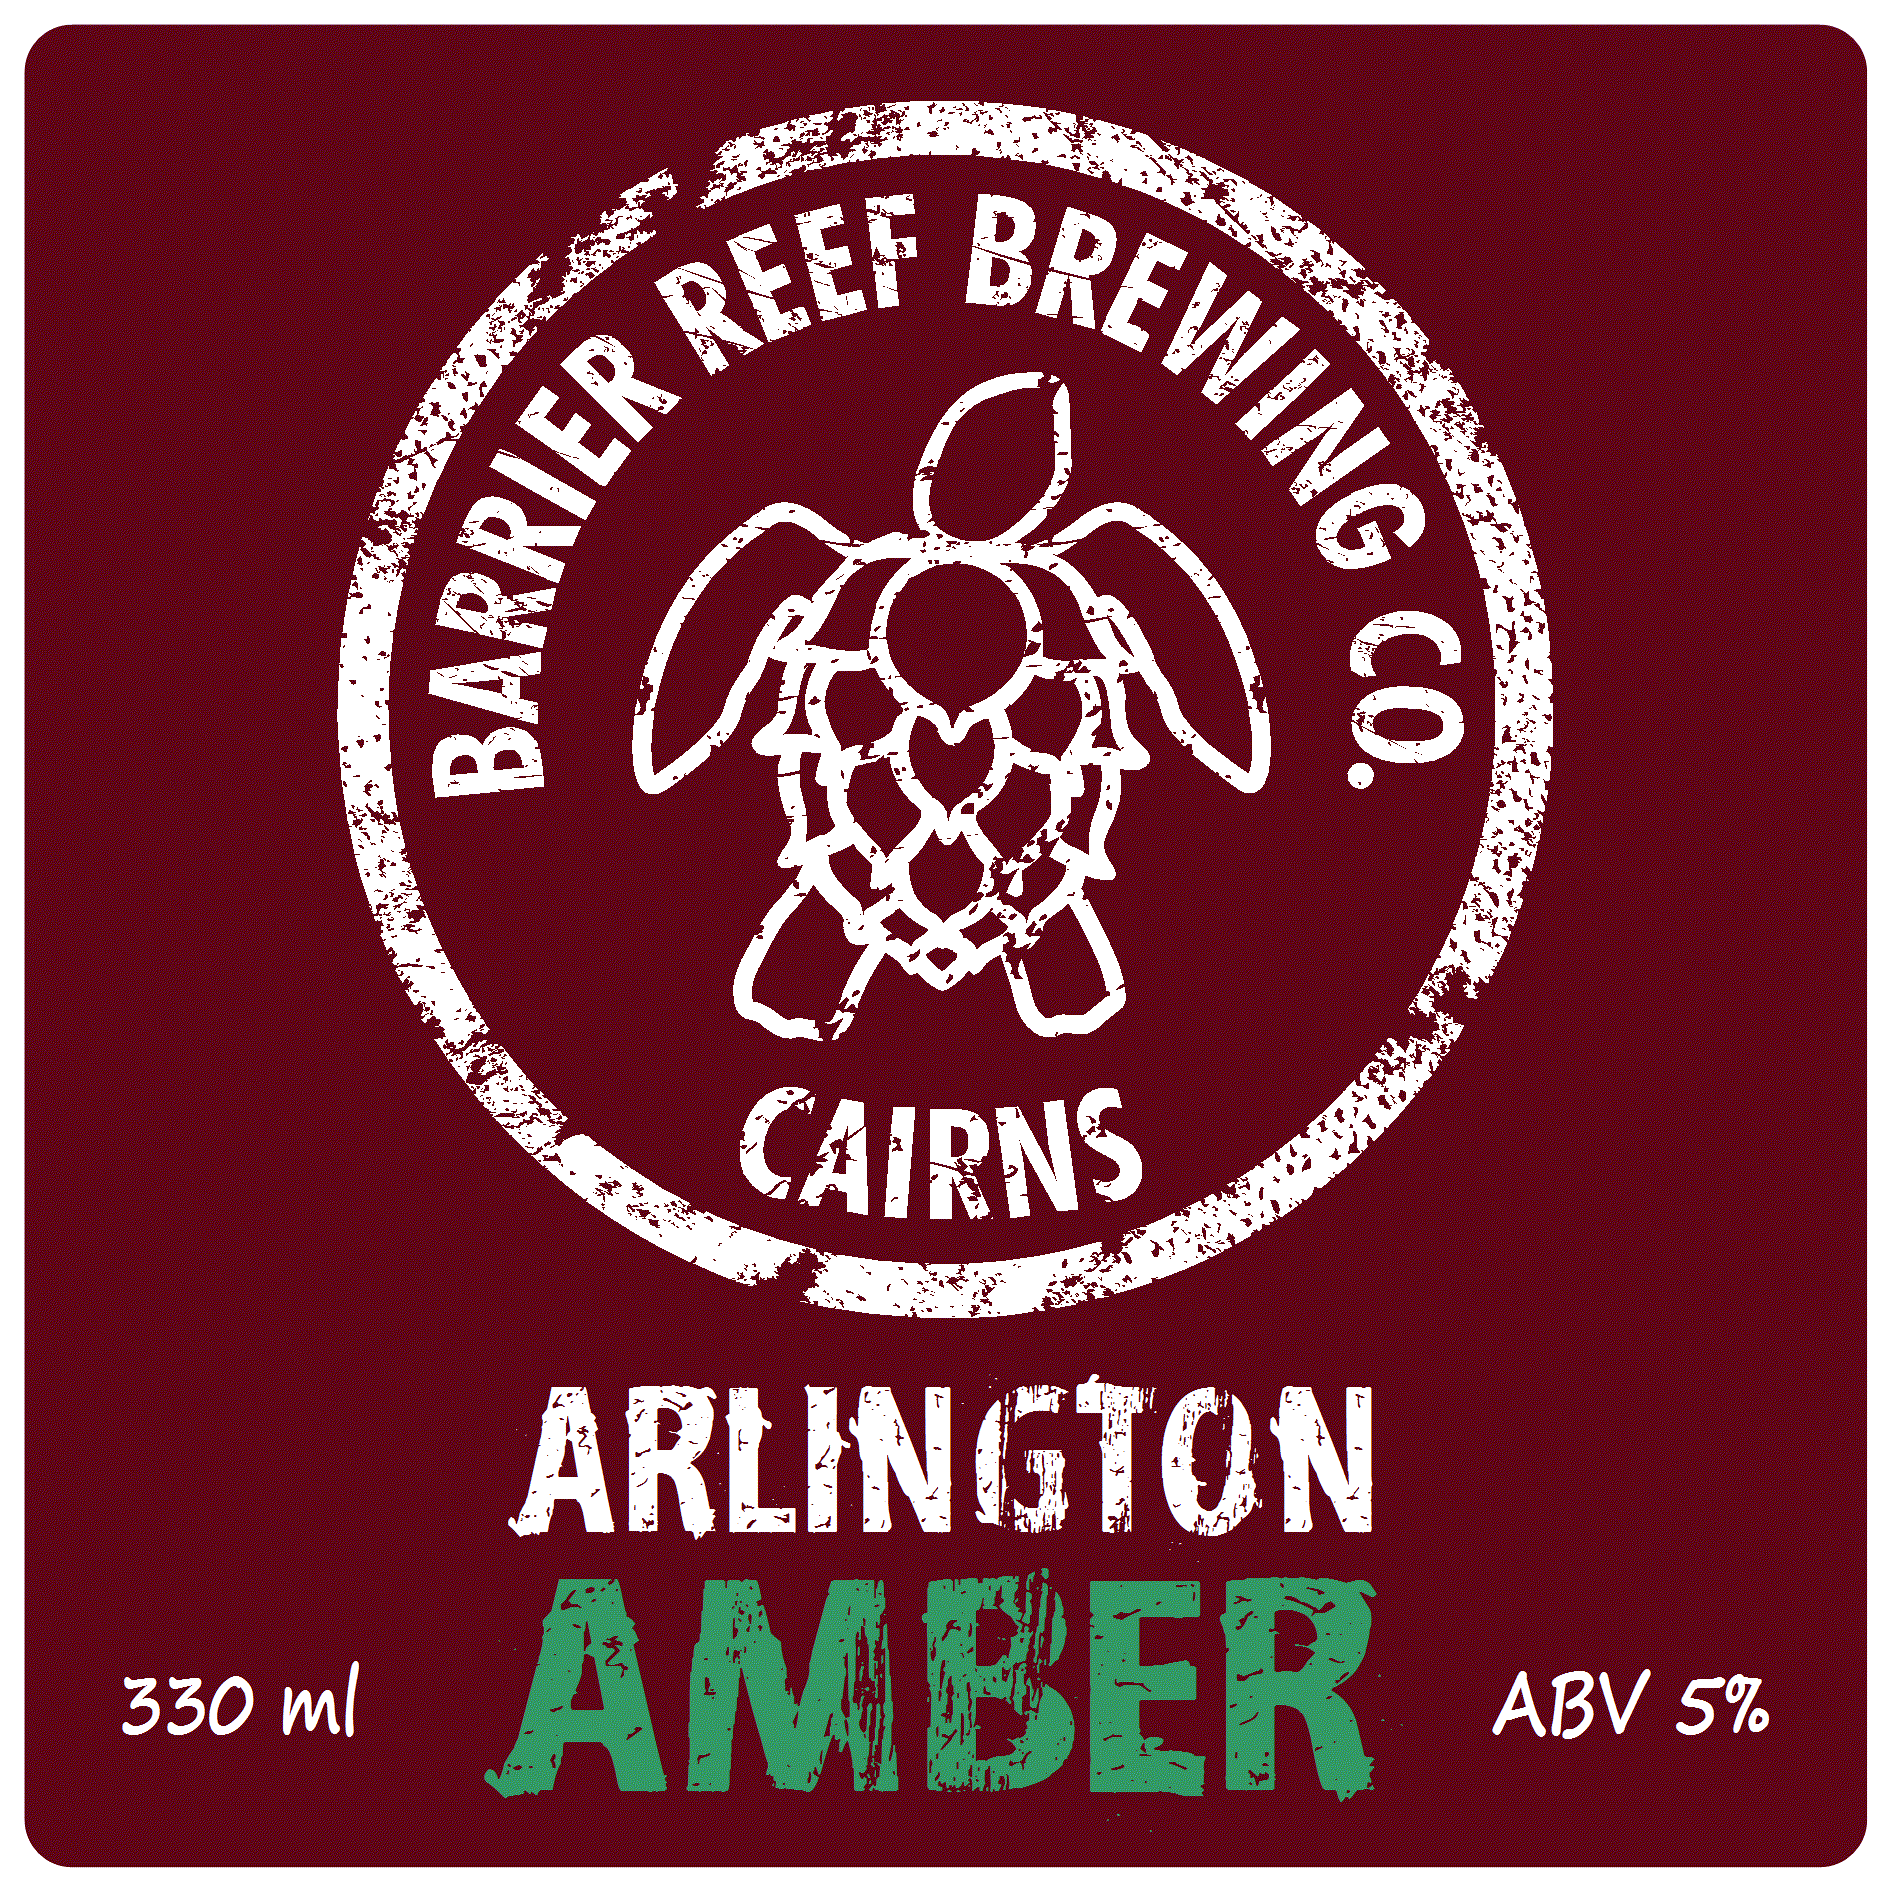 Arlington Amber Ale